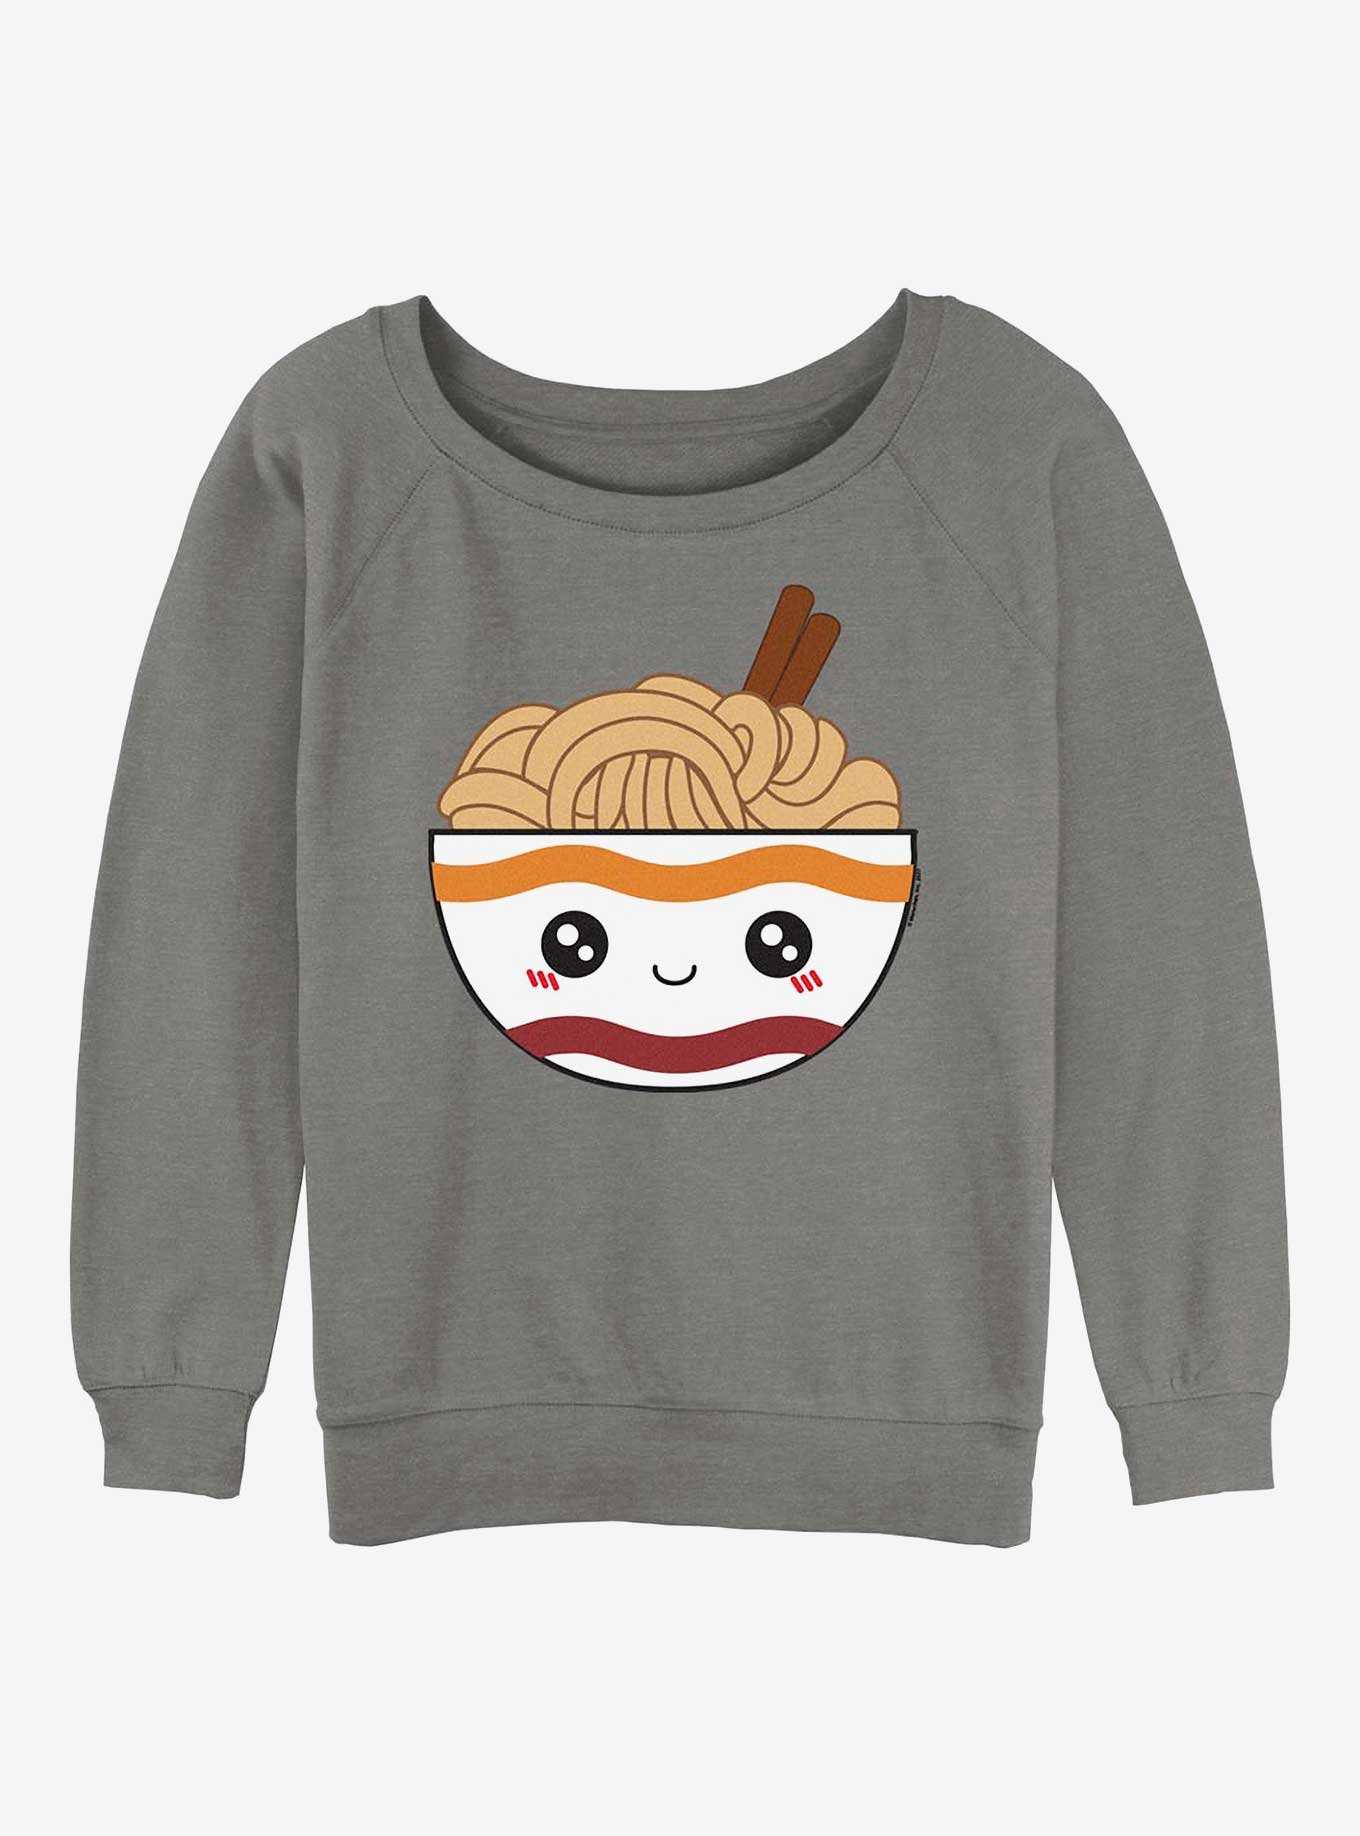 Maruchan Noodle Bowl Girls Slouchy Sweatshirt, , hi-res